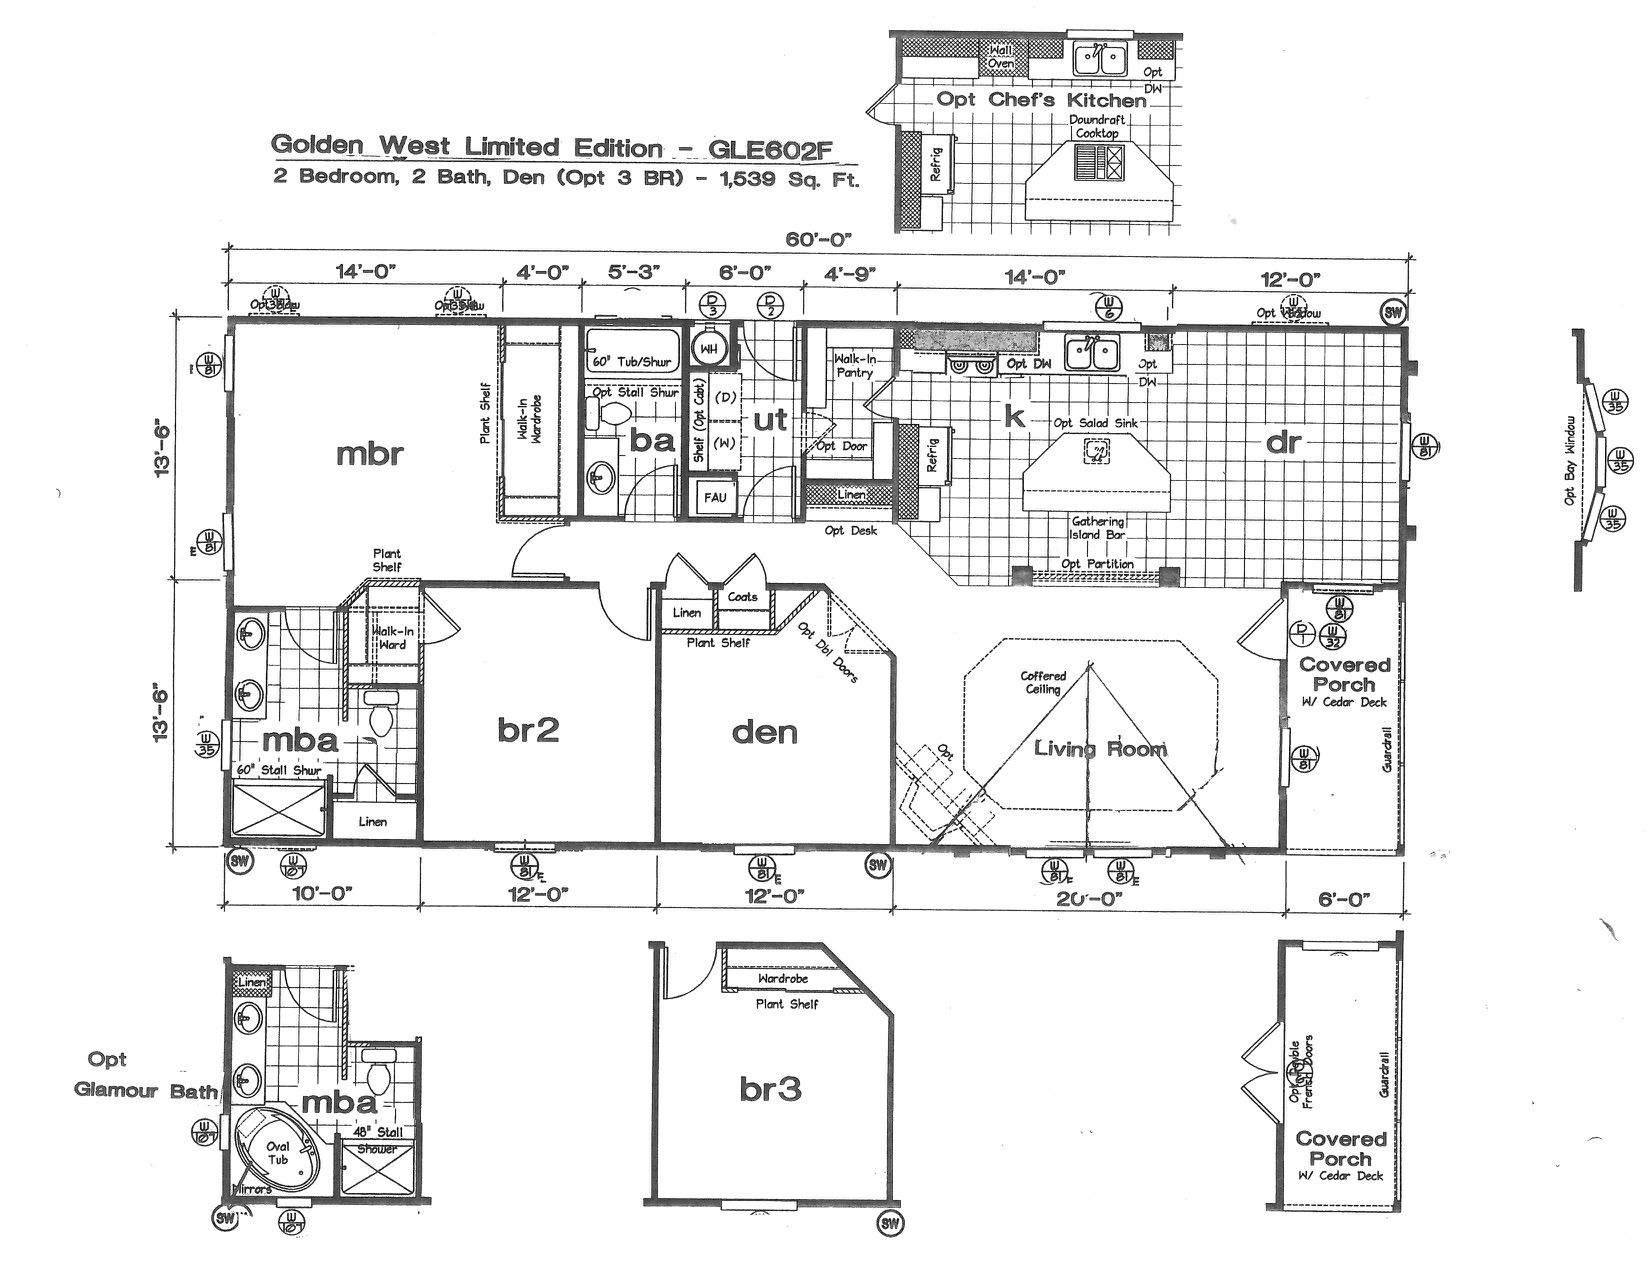 Homes Direct Modular Homes - Model GLE602F - Floorplan